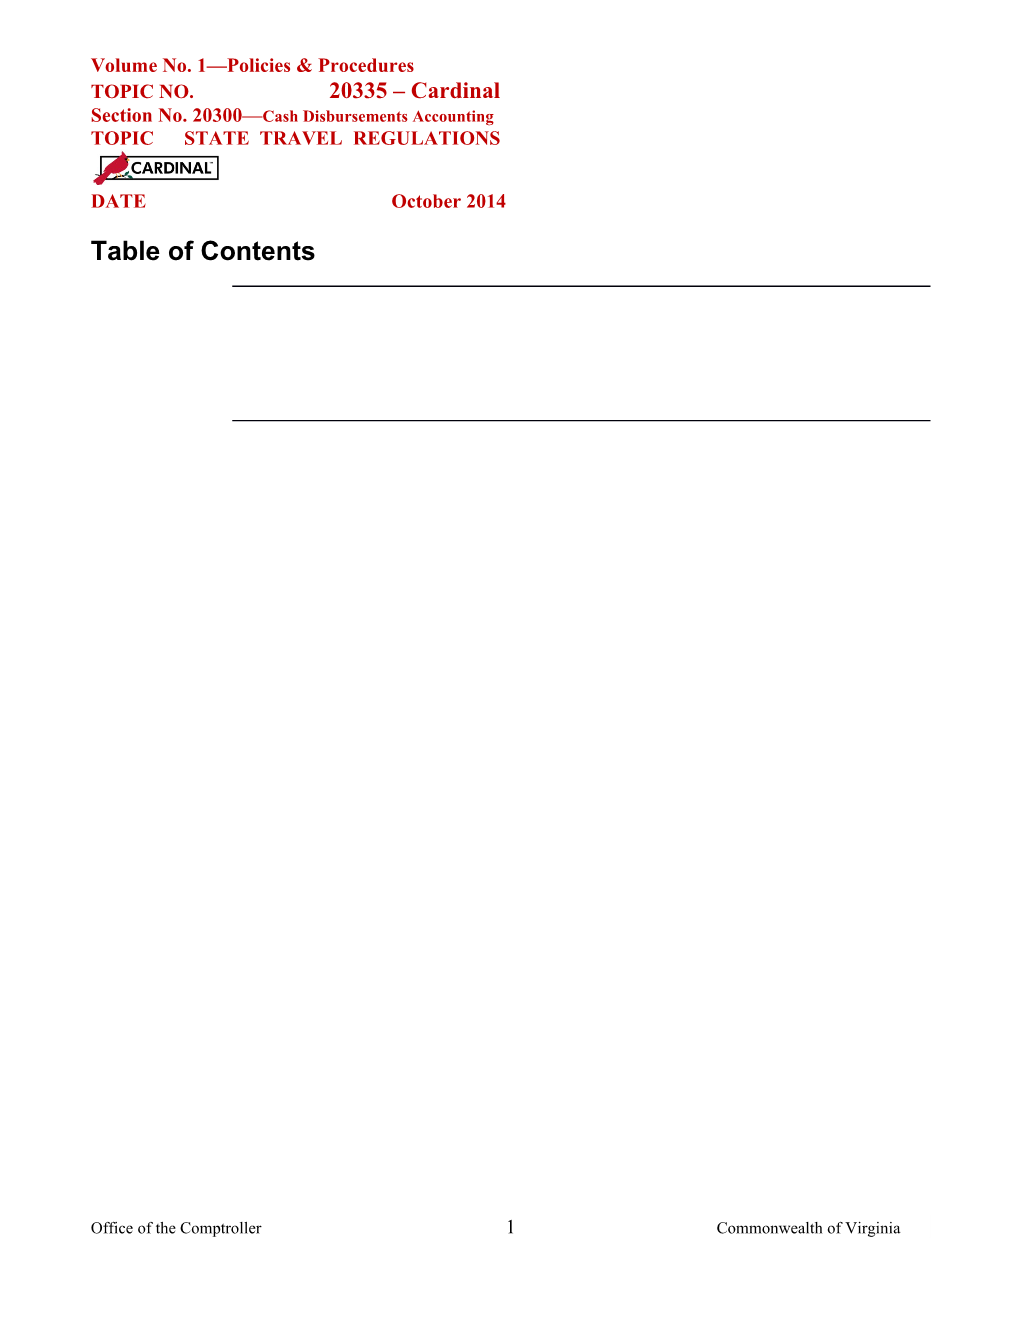 CAPP Manual - 20335 - Cash Disbursements Accounting, State Travel Regulations